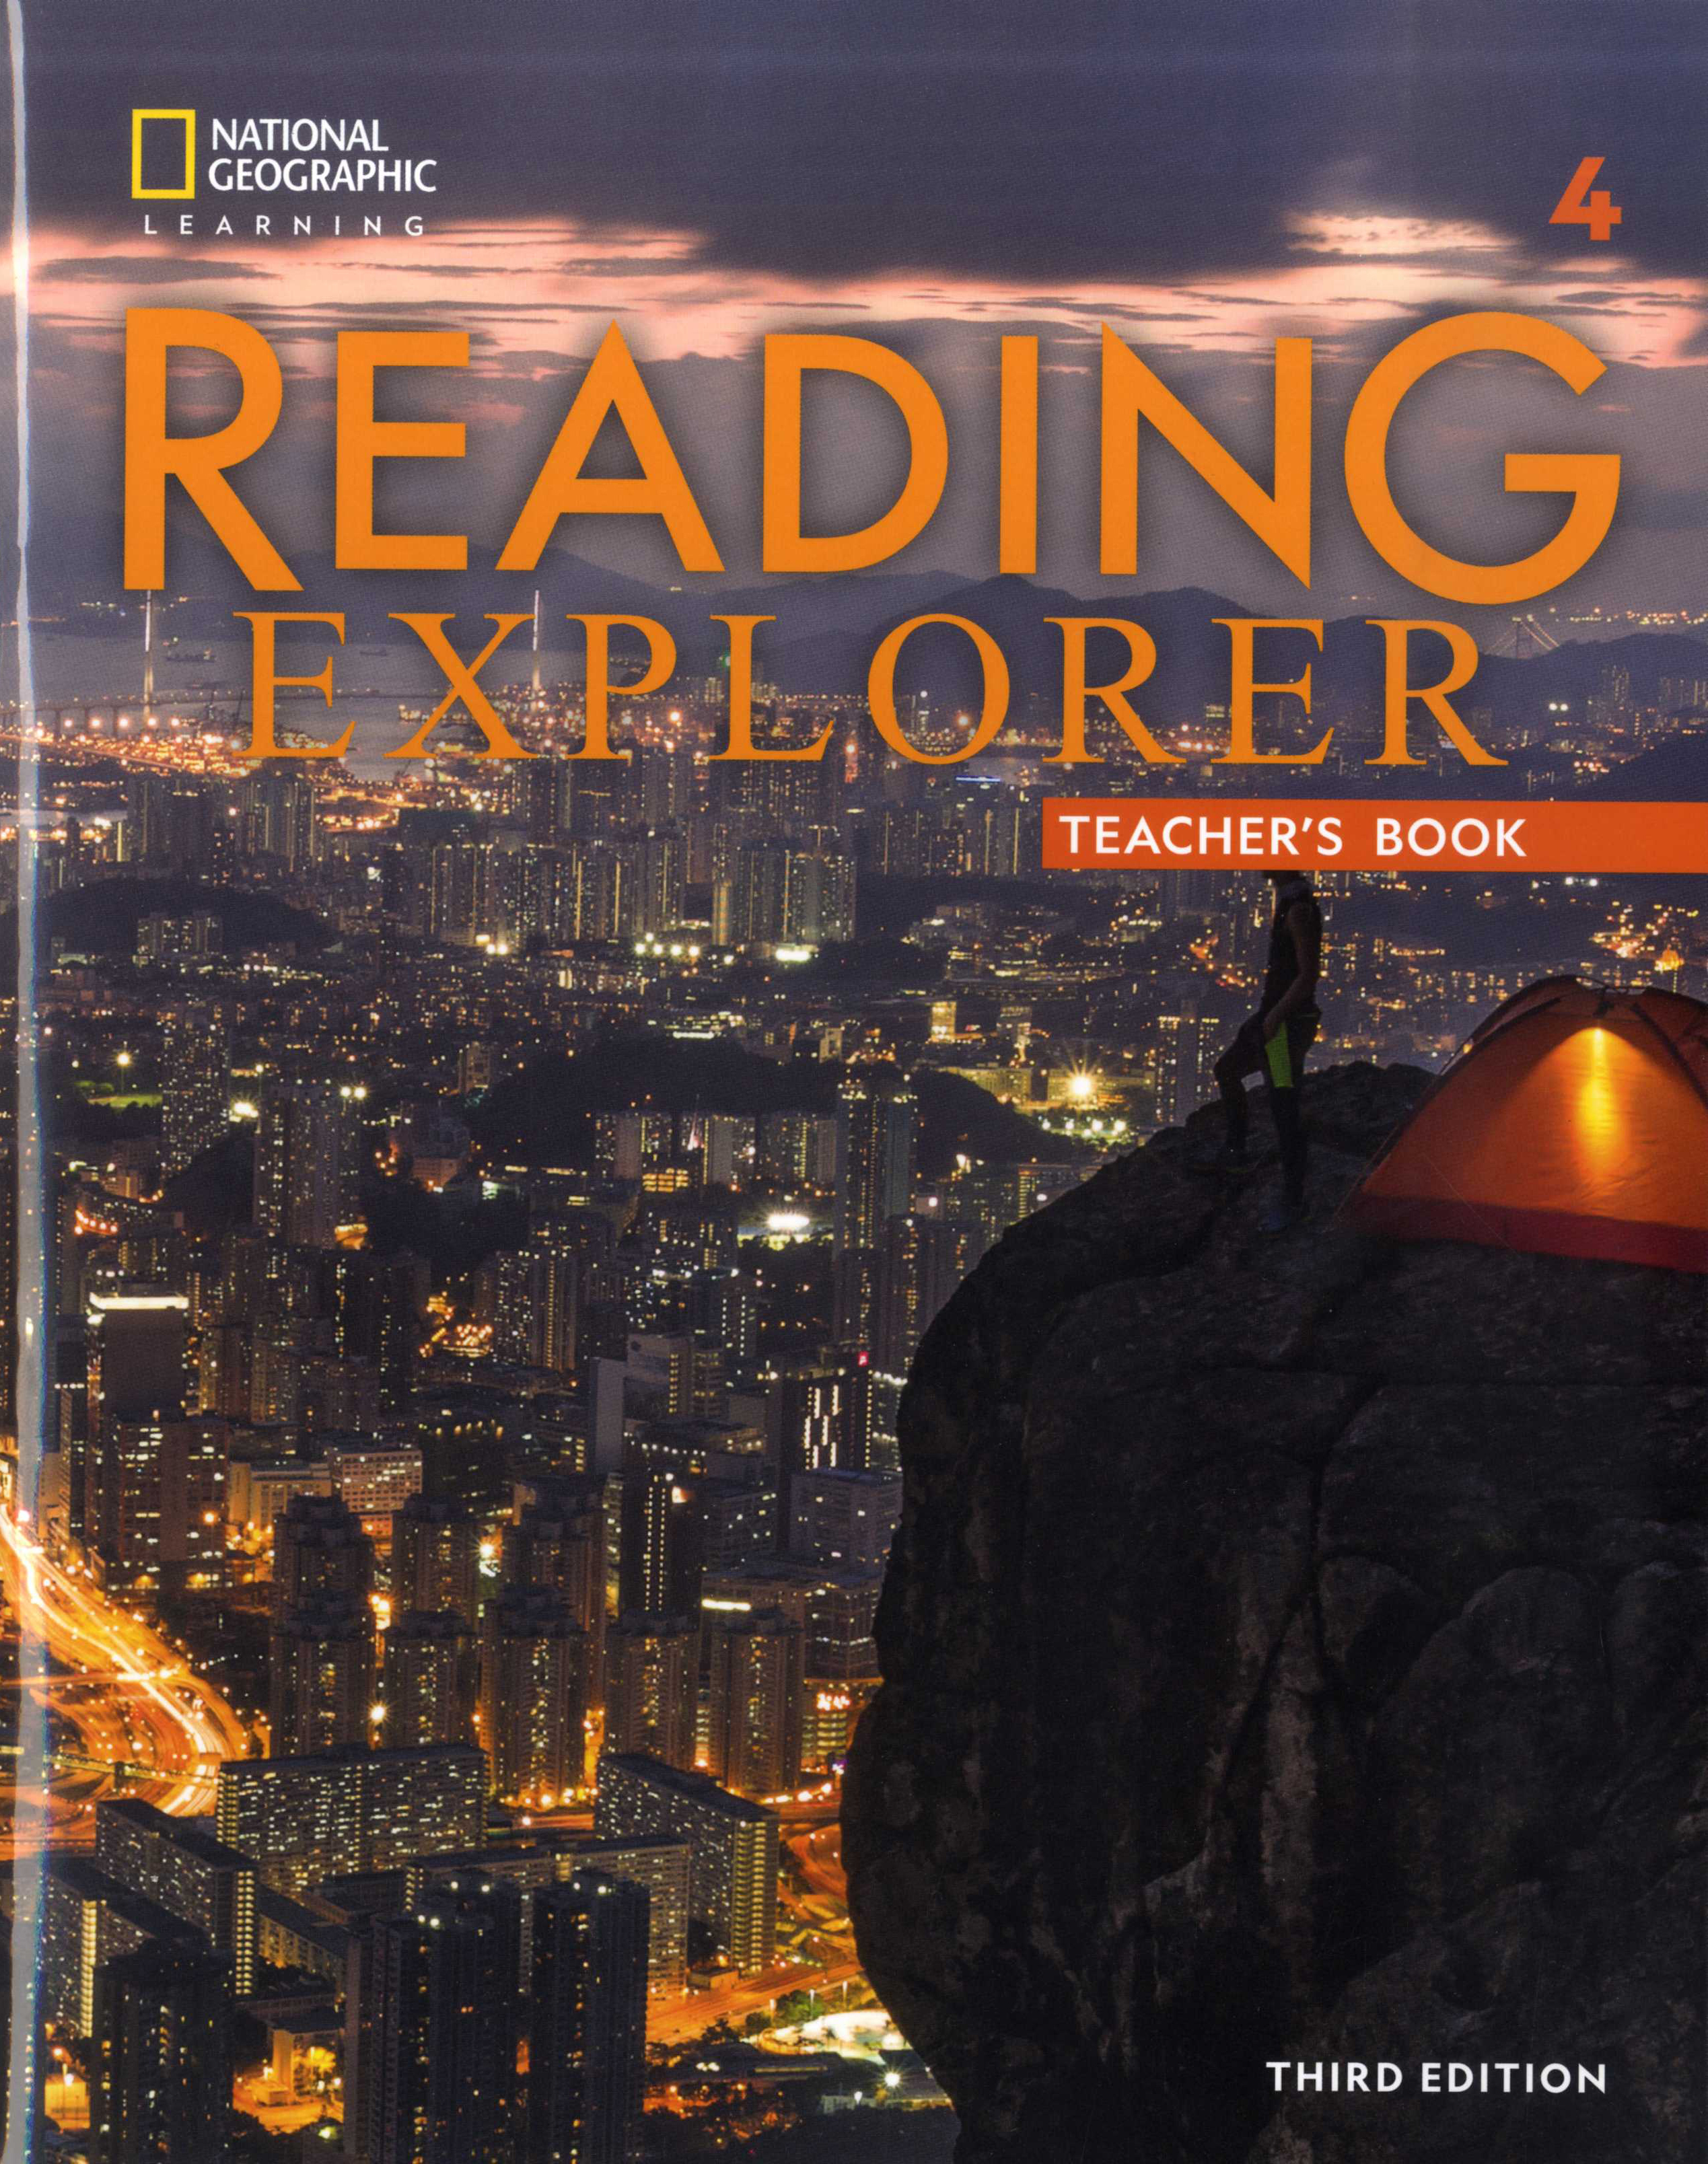 Reading explorer 3/E 4 SB Teacher's Book